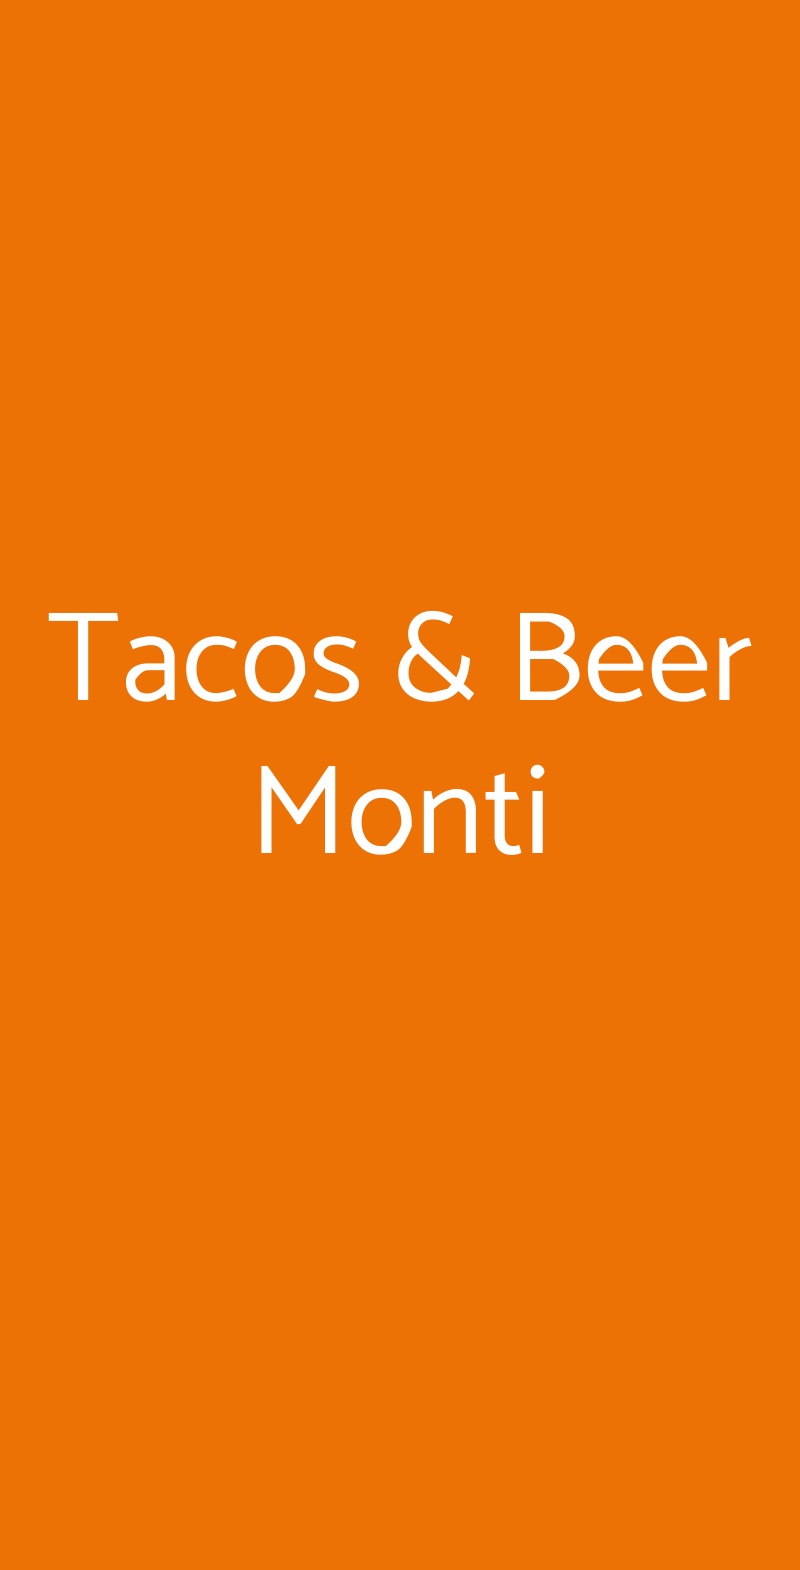 Tacos & Beer Monti Roma menù 1 pagina